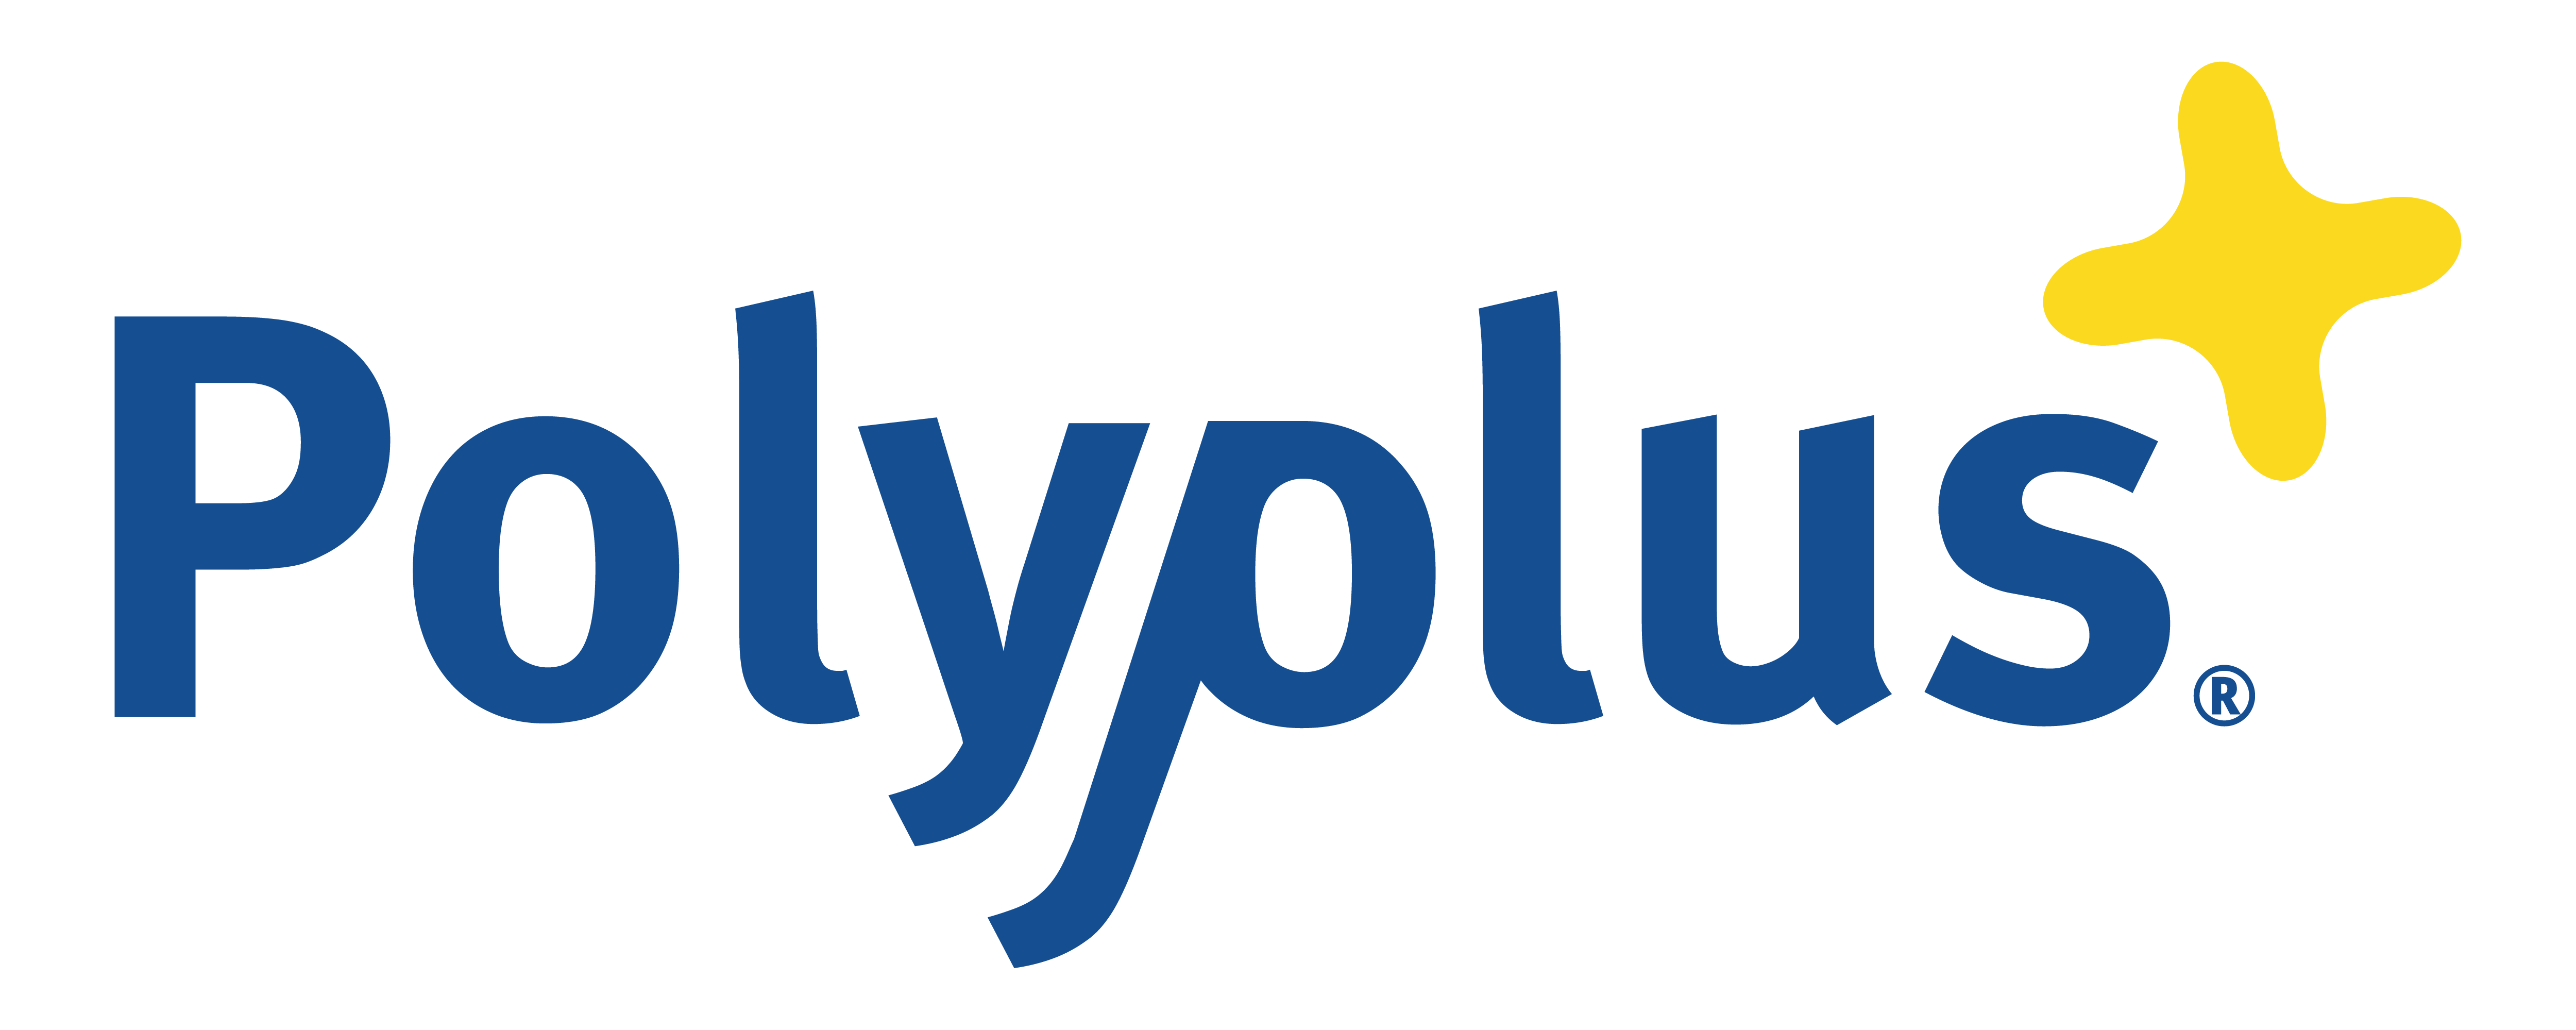 https://www.polyplus-transfection.com/?utm_source=referral&utm_medium=Logo%20webinar%20page&utm_campaign